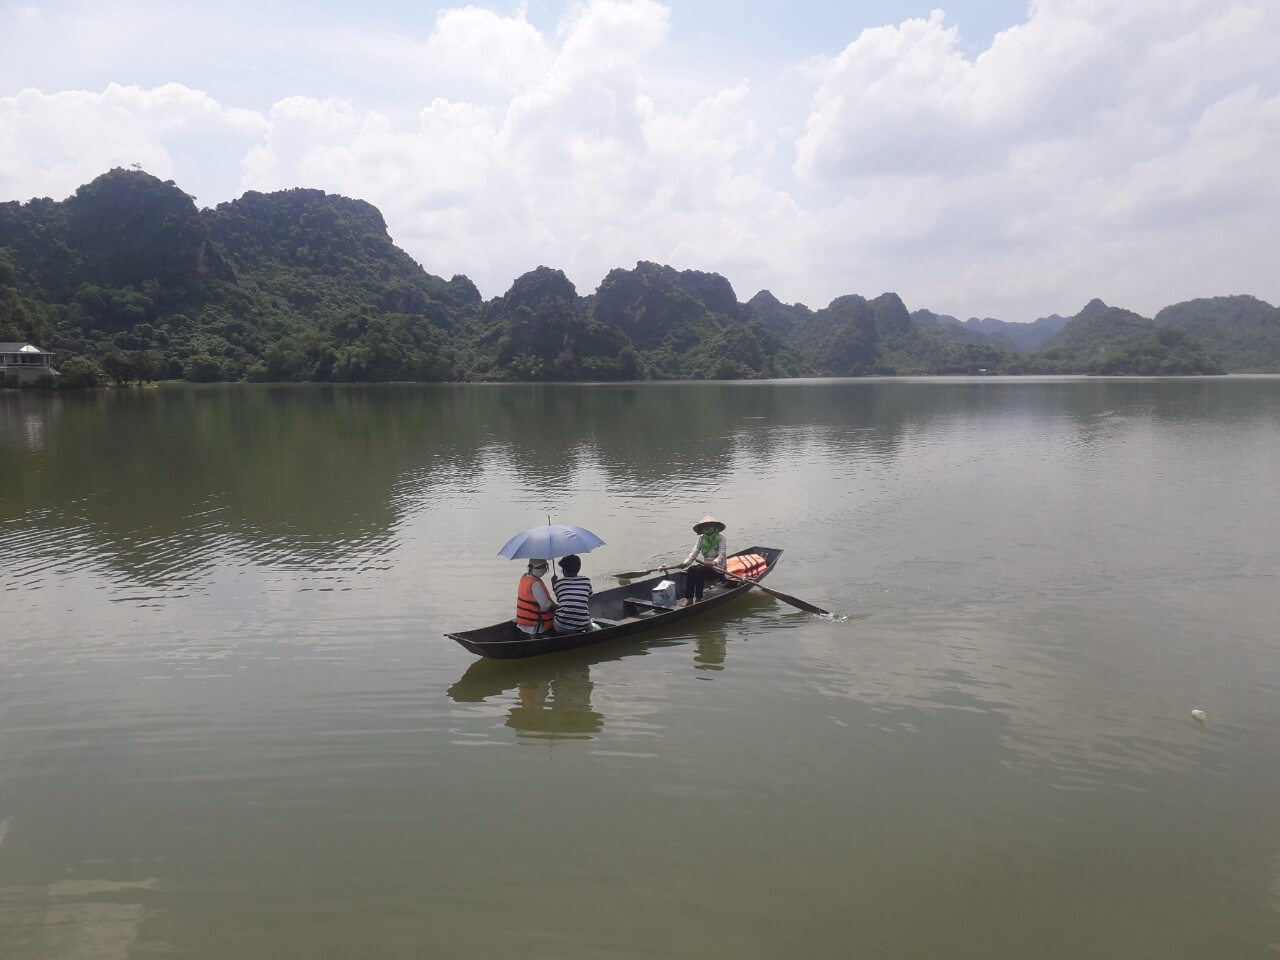 Boat ride in Quan Son lake